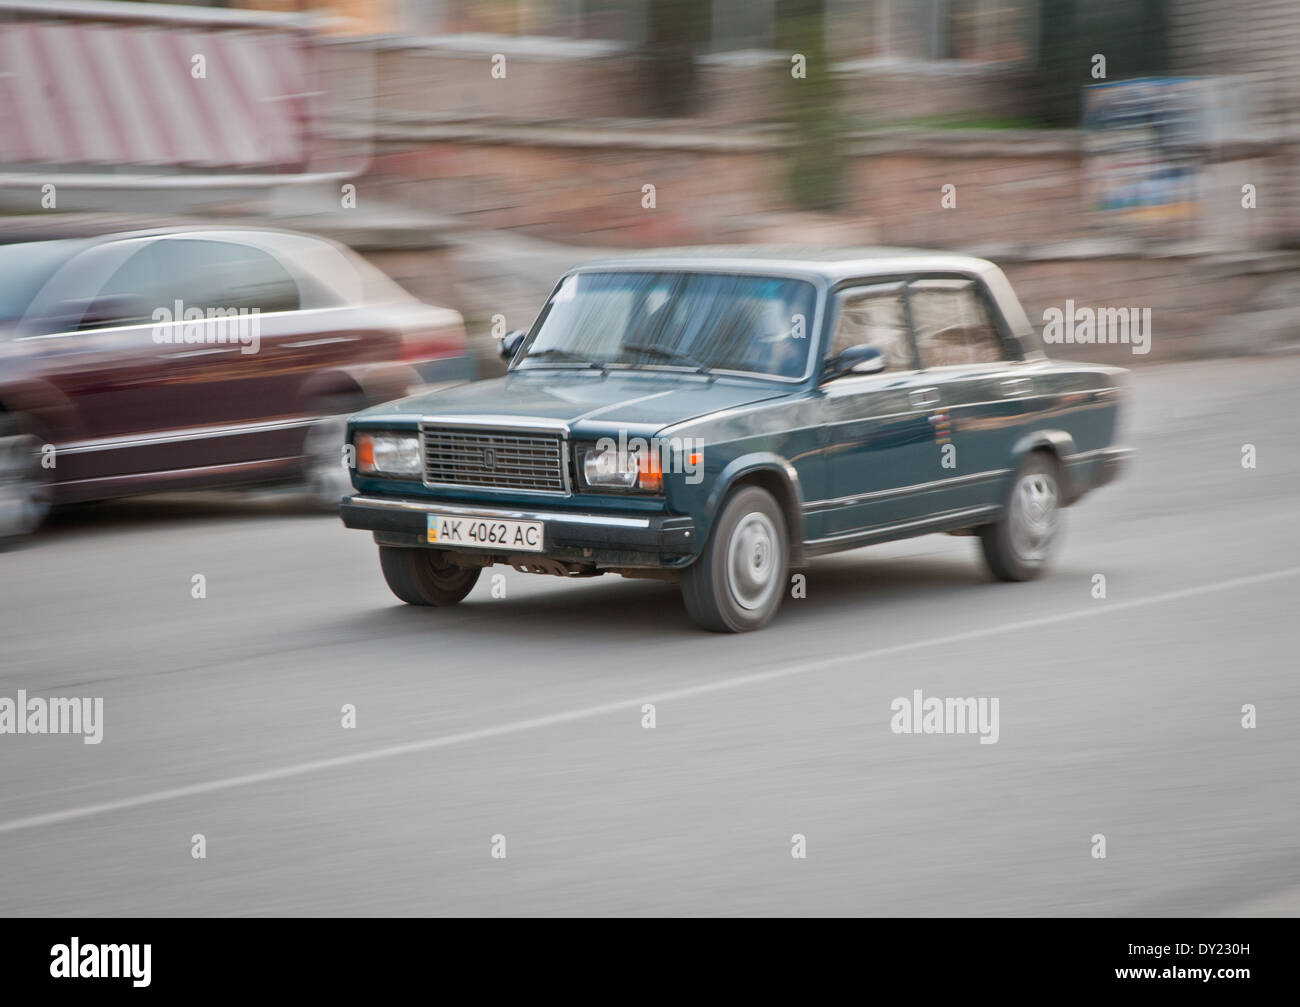 Lada Riva (Classic) car from Russian car manufacturer AvtoVAZ on street in Simferopol, Crimea Stock Photo